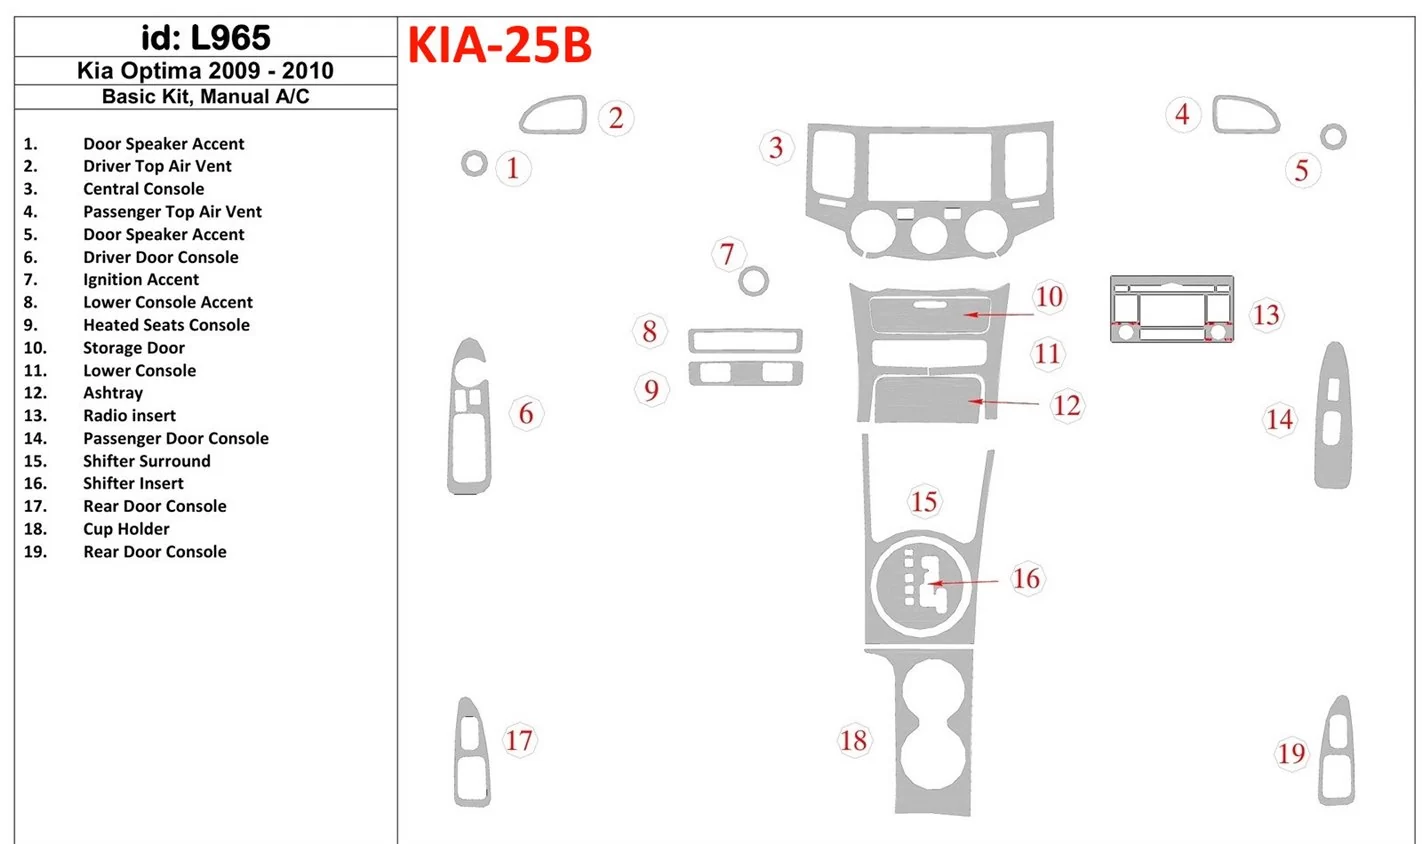 KIA Optima 2009-2010 Grundset, Manual Gearbox AC BD innenausstattung armaturendekor cockpit dekor - 1- Cockpit Dekor Innenraum